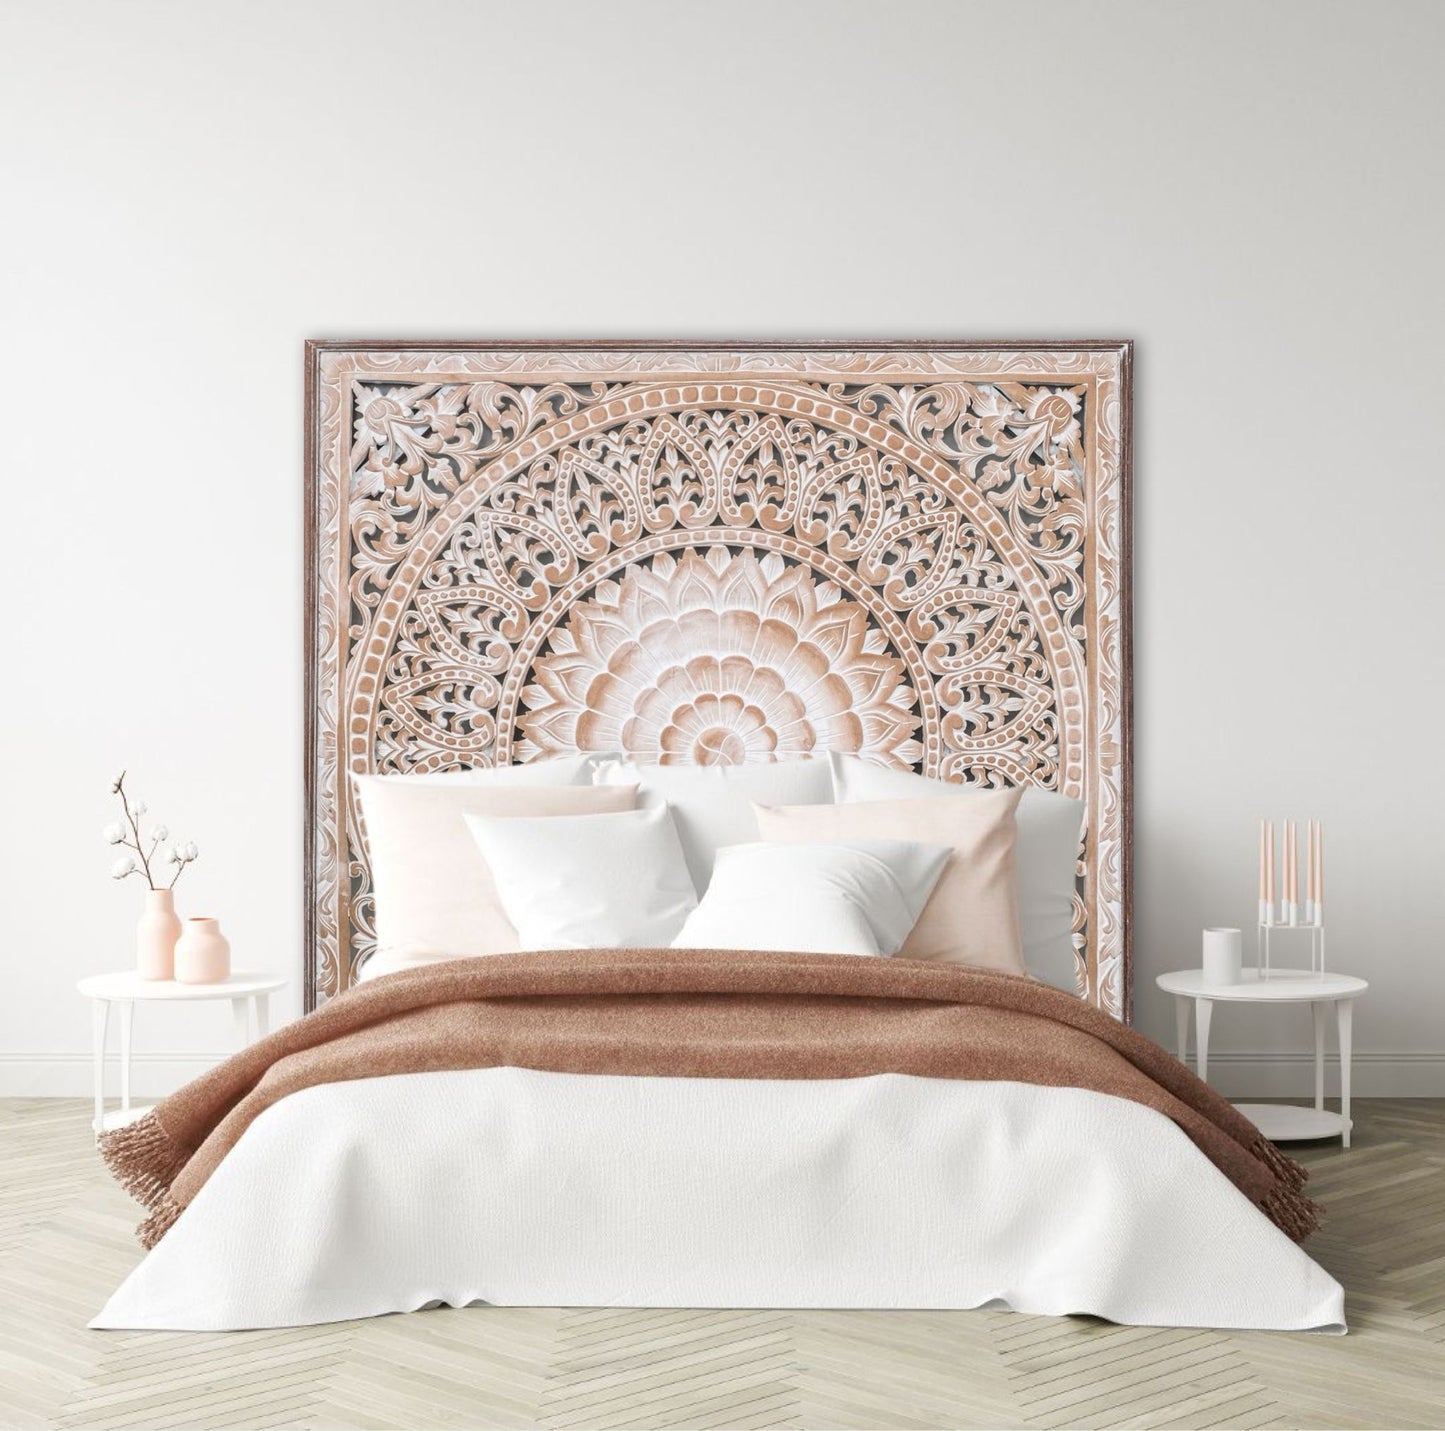 Carved Bed Headboard "Cendana"